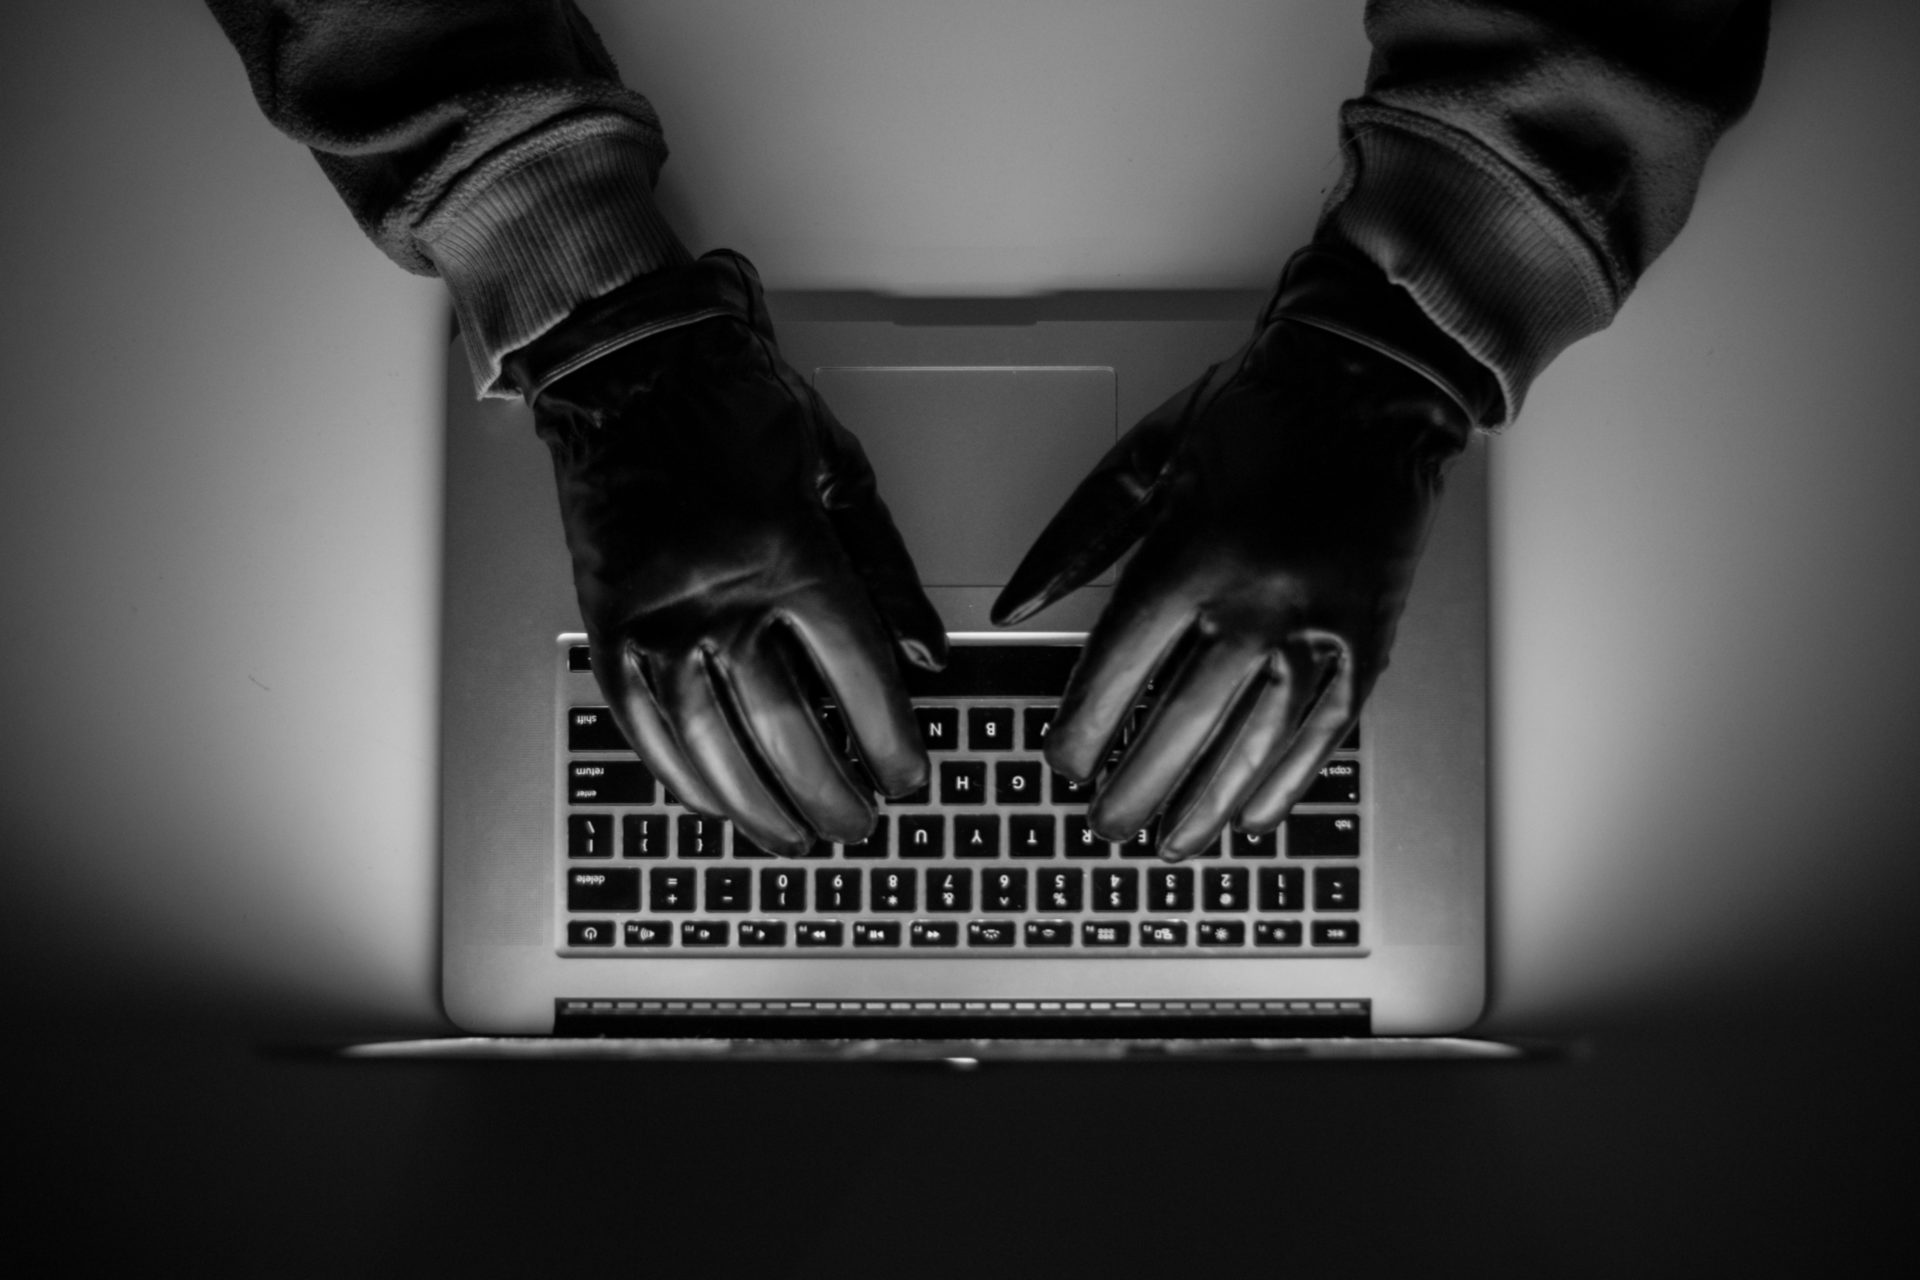 Online crime takes place as someone wearing black gloves types on laptop. Image: Hajrudin Hodzic / Alamy Stock Photo